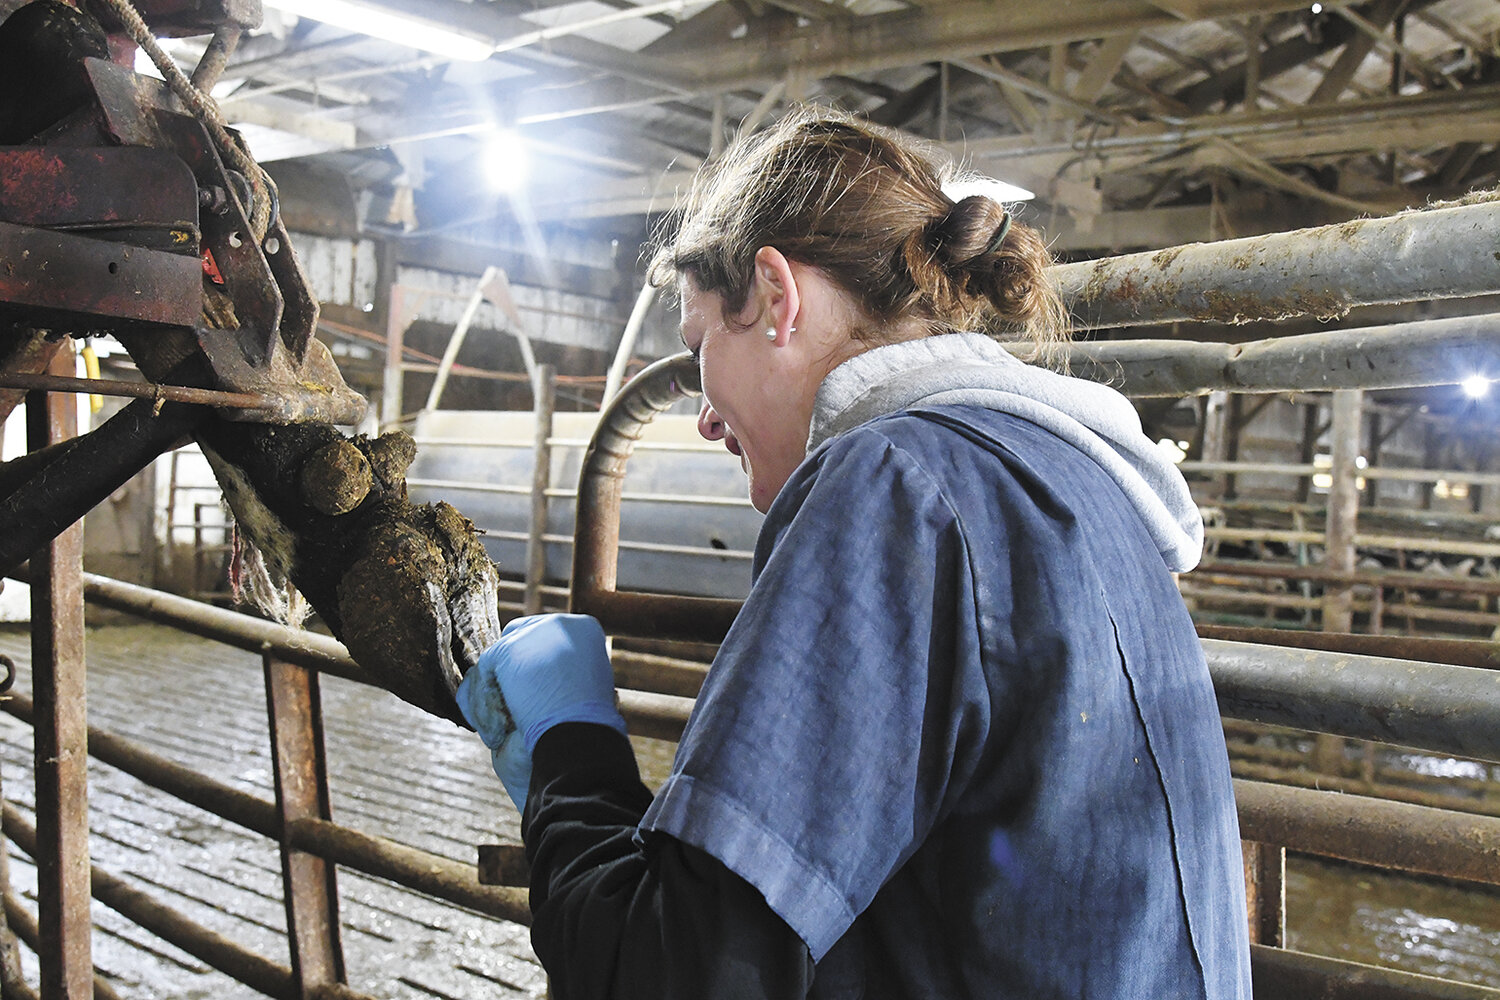 Dr. Amy Dahlke works on a cow’s hoof Oct. 19 at the Naatz family’s dairy farm near Mantorville, Minnesota. Thursdays are herd check days.